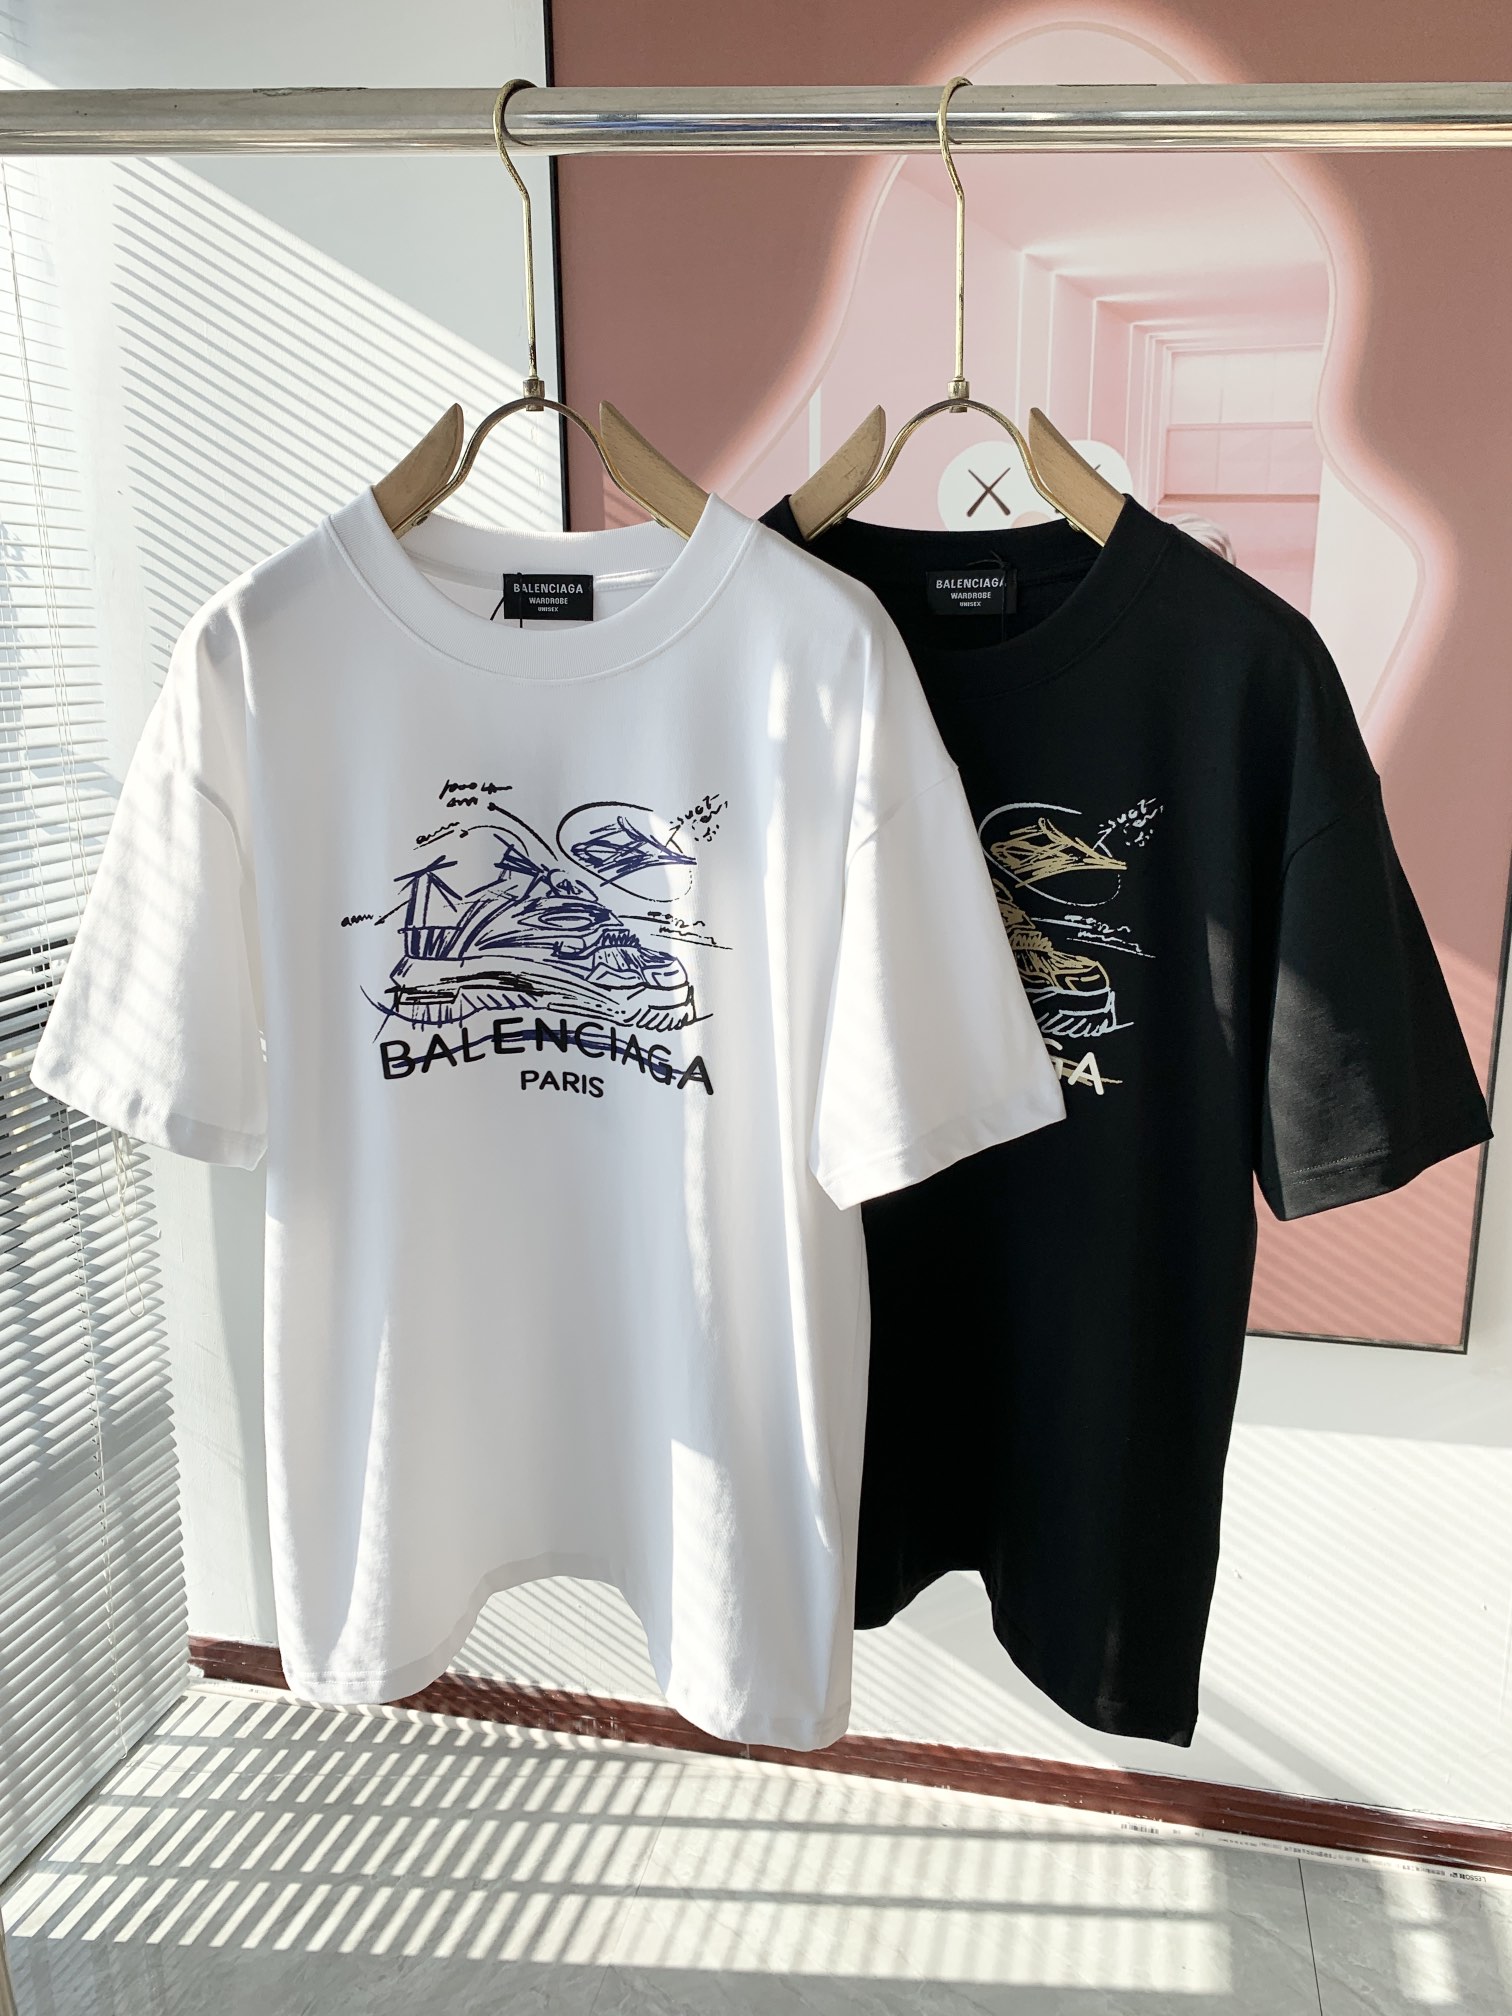 Balenciaga Kleding T-Shirt Verkoop van hoge kwaliteit
 Afdrukken Unisex Katoen Lente/Zomercollectie Fashion Korte mouw